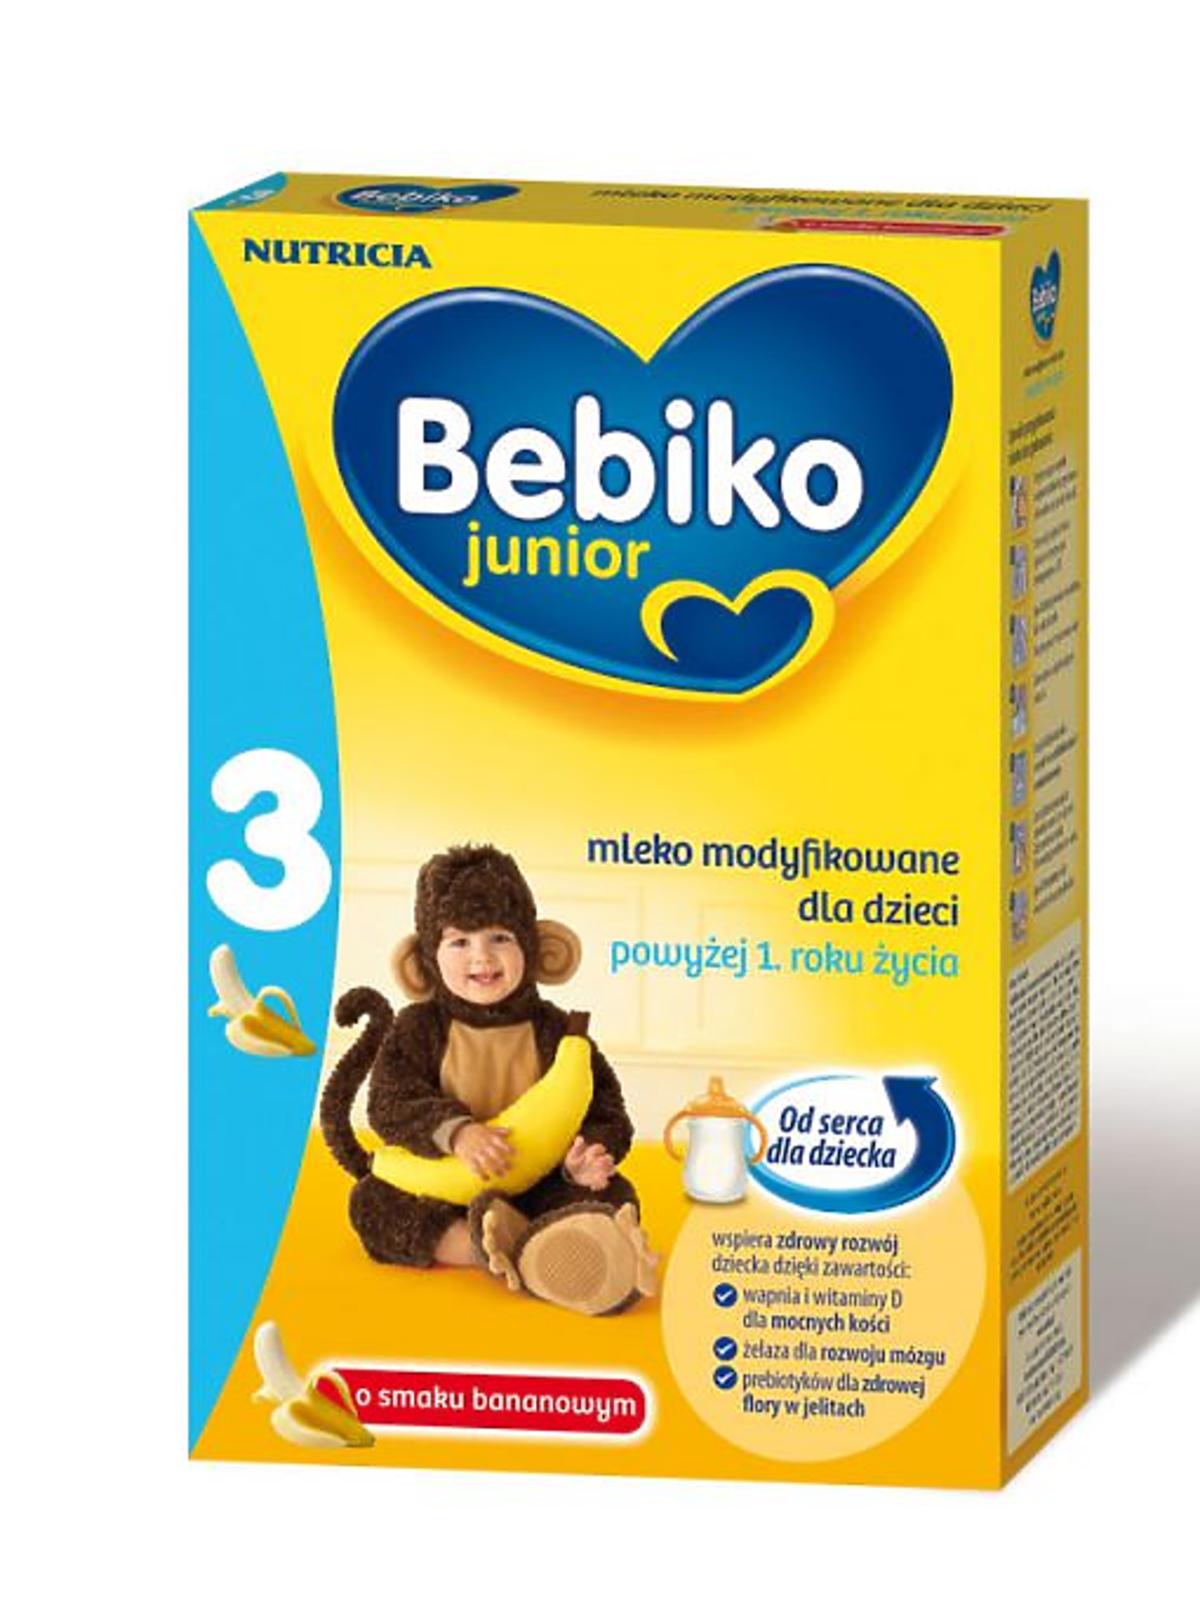 Bebiko-3-o-smaku-bananowym.jpg